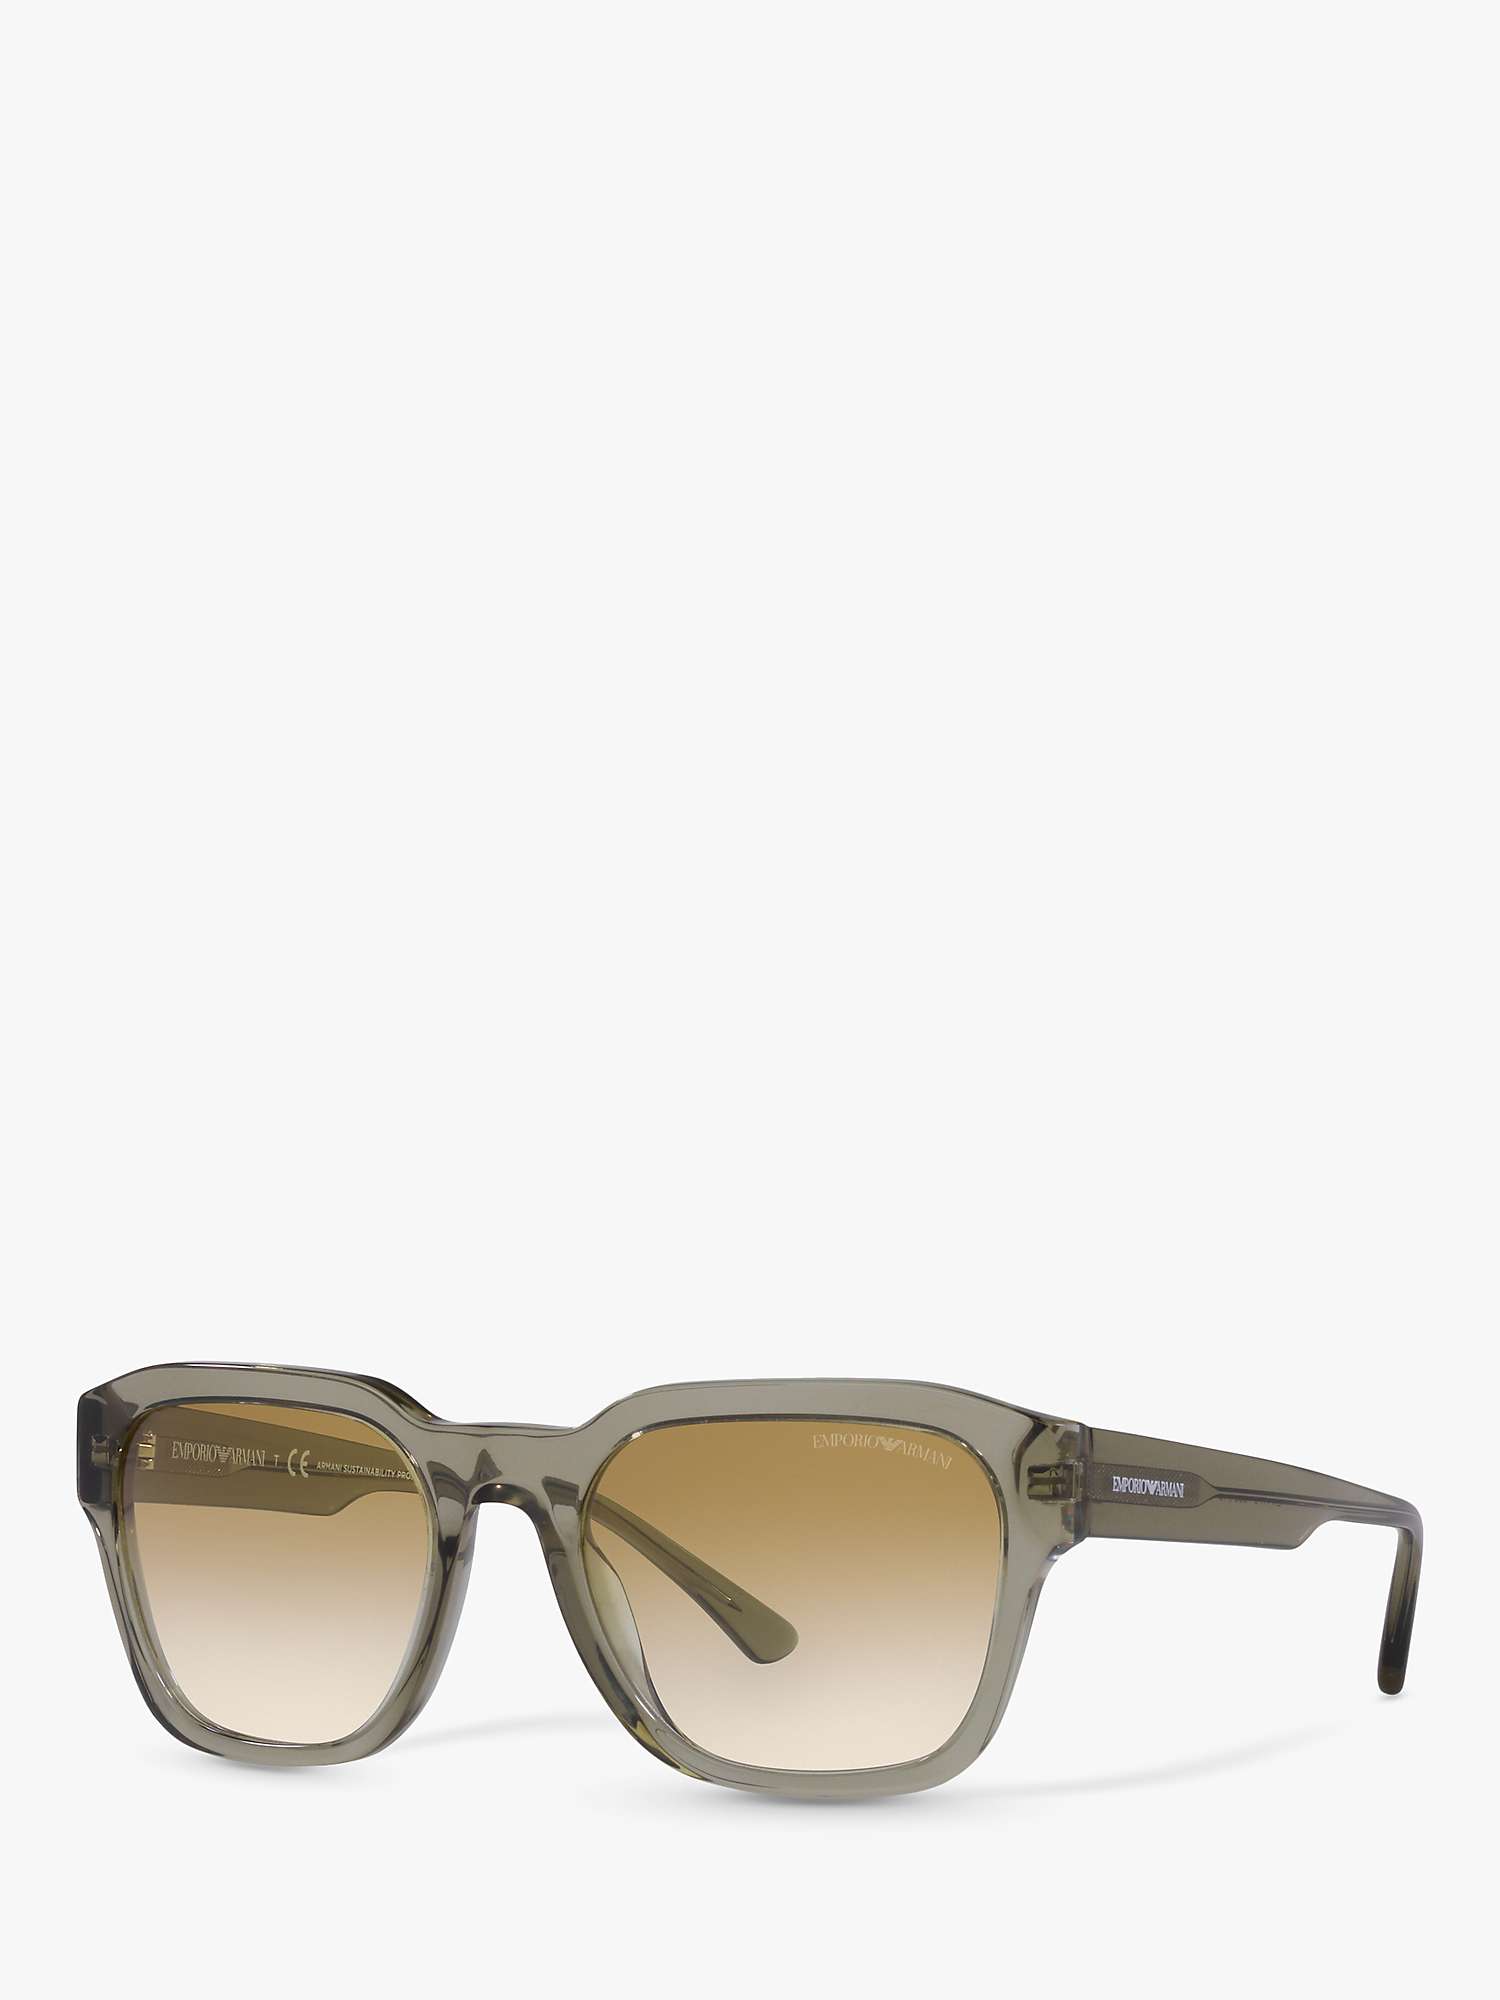 Buy Emporio Armani EA4175 Men's Square Sunglasses,Transparent Green/Brown Gradient Online at johnlewis.com